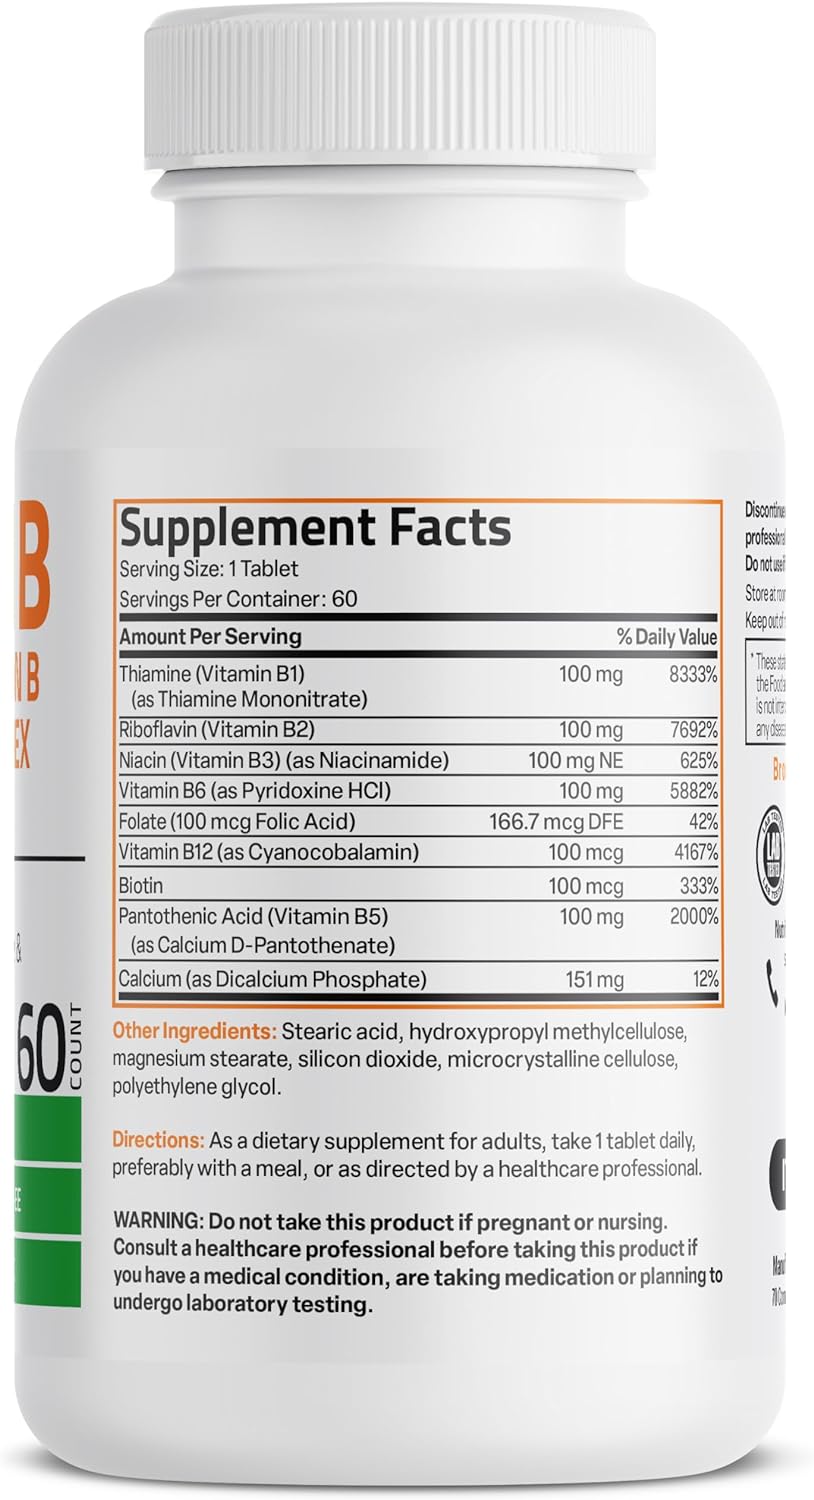 Bronson Vitamin B 100 Complex High Potency Sustained Release (Vitamin B1, B2, B3, B6, B9 - Folic Acid, B12), 60 Tablets